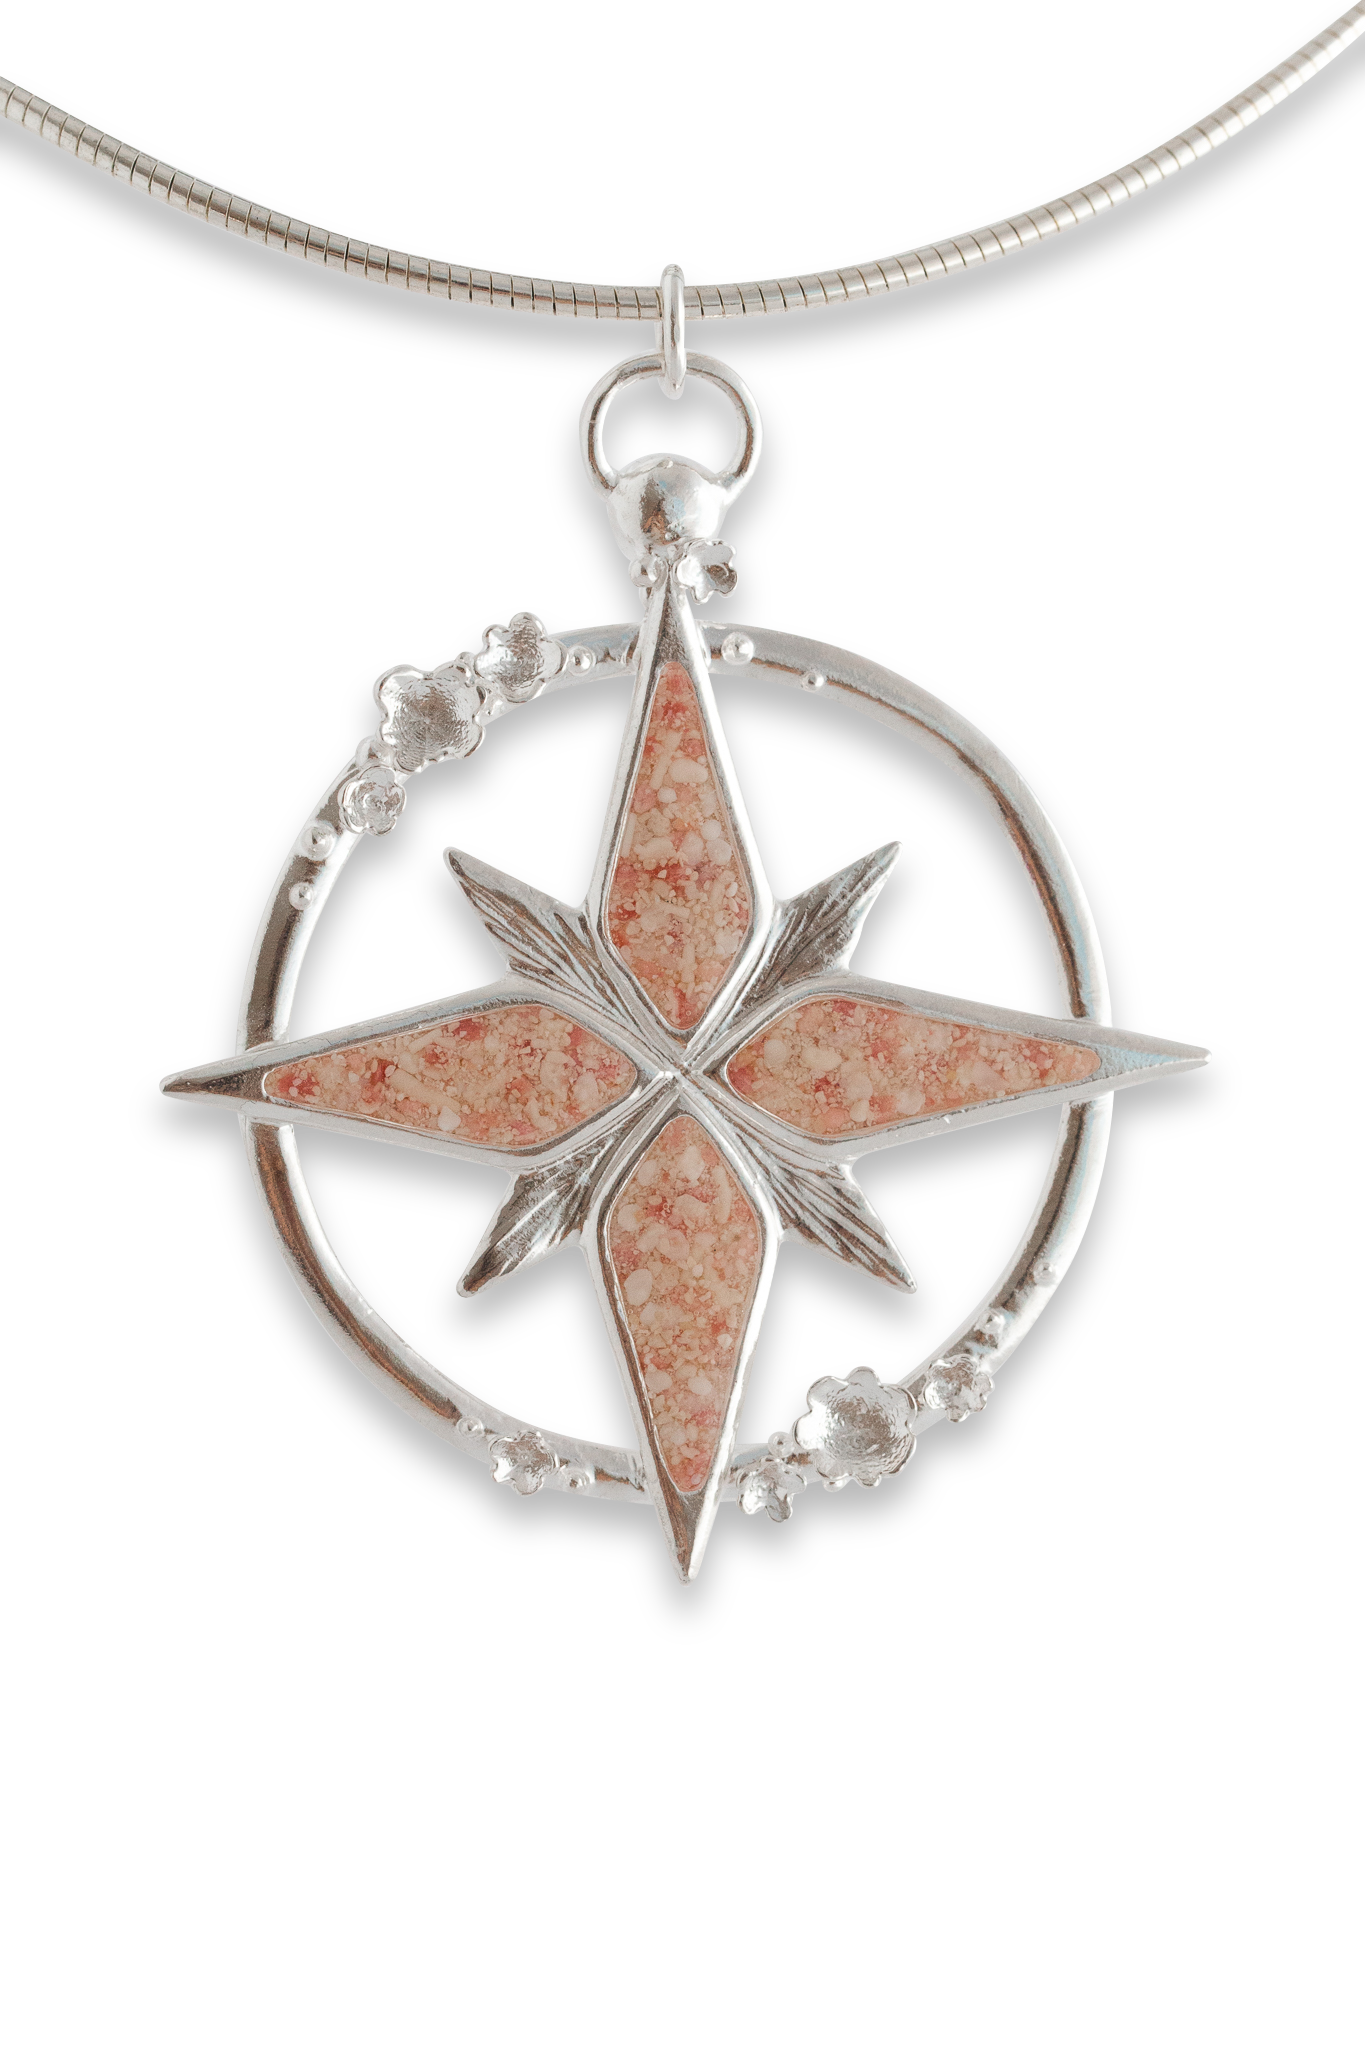 Compass Rose ~ 2020 Ornament / Pendant